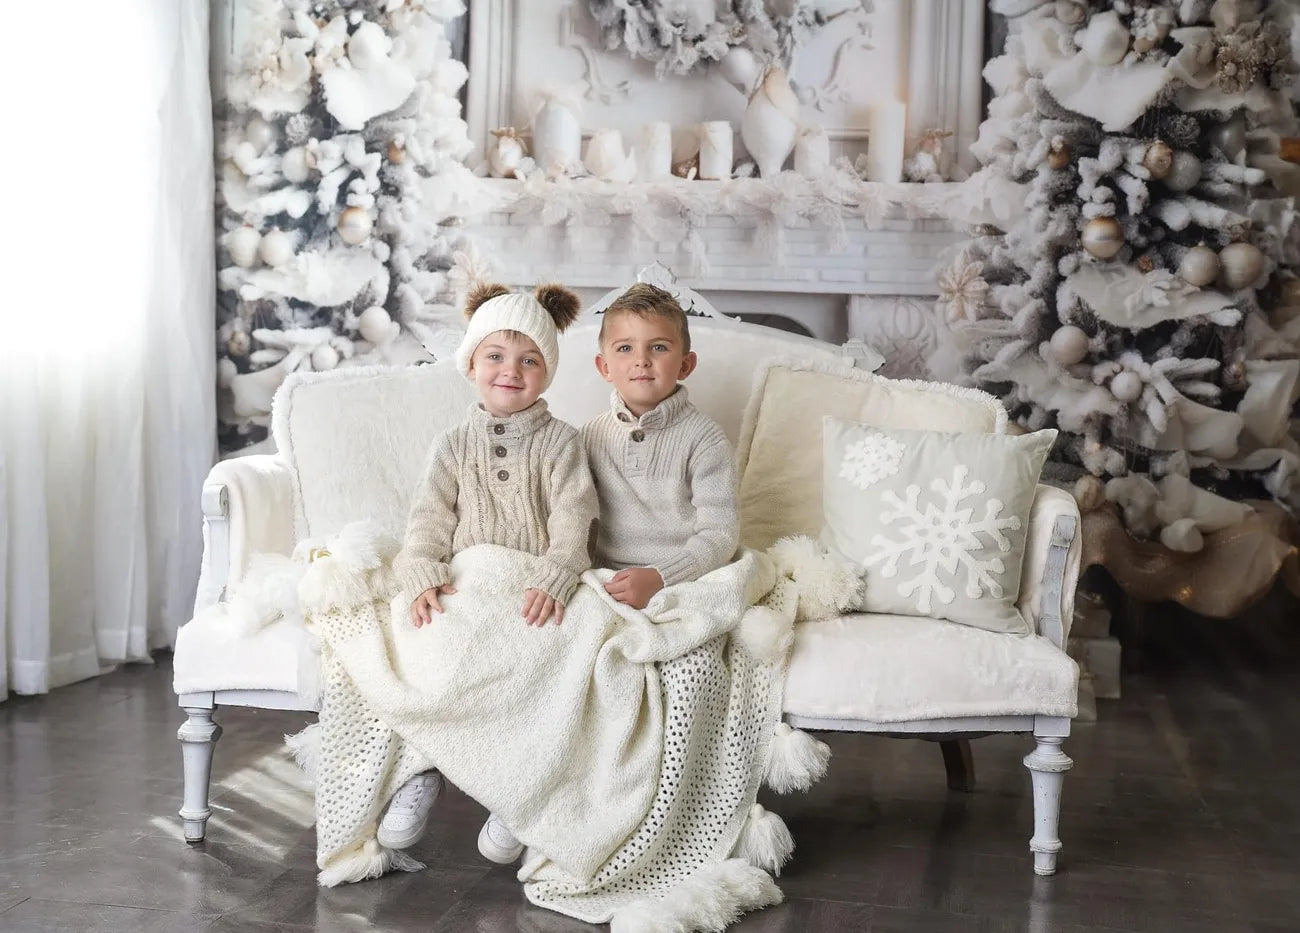 Kate Christmas Elegant Room White Fireplace Fleece Backdrop for Photography